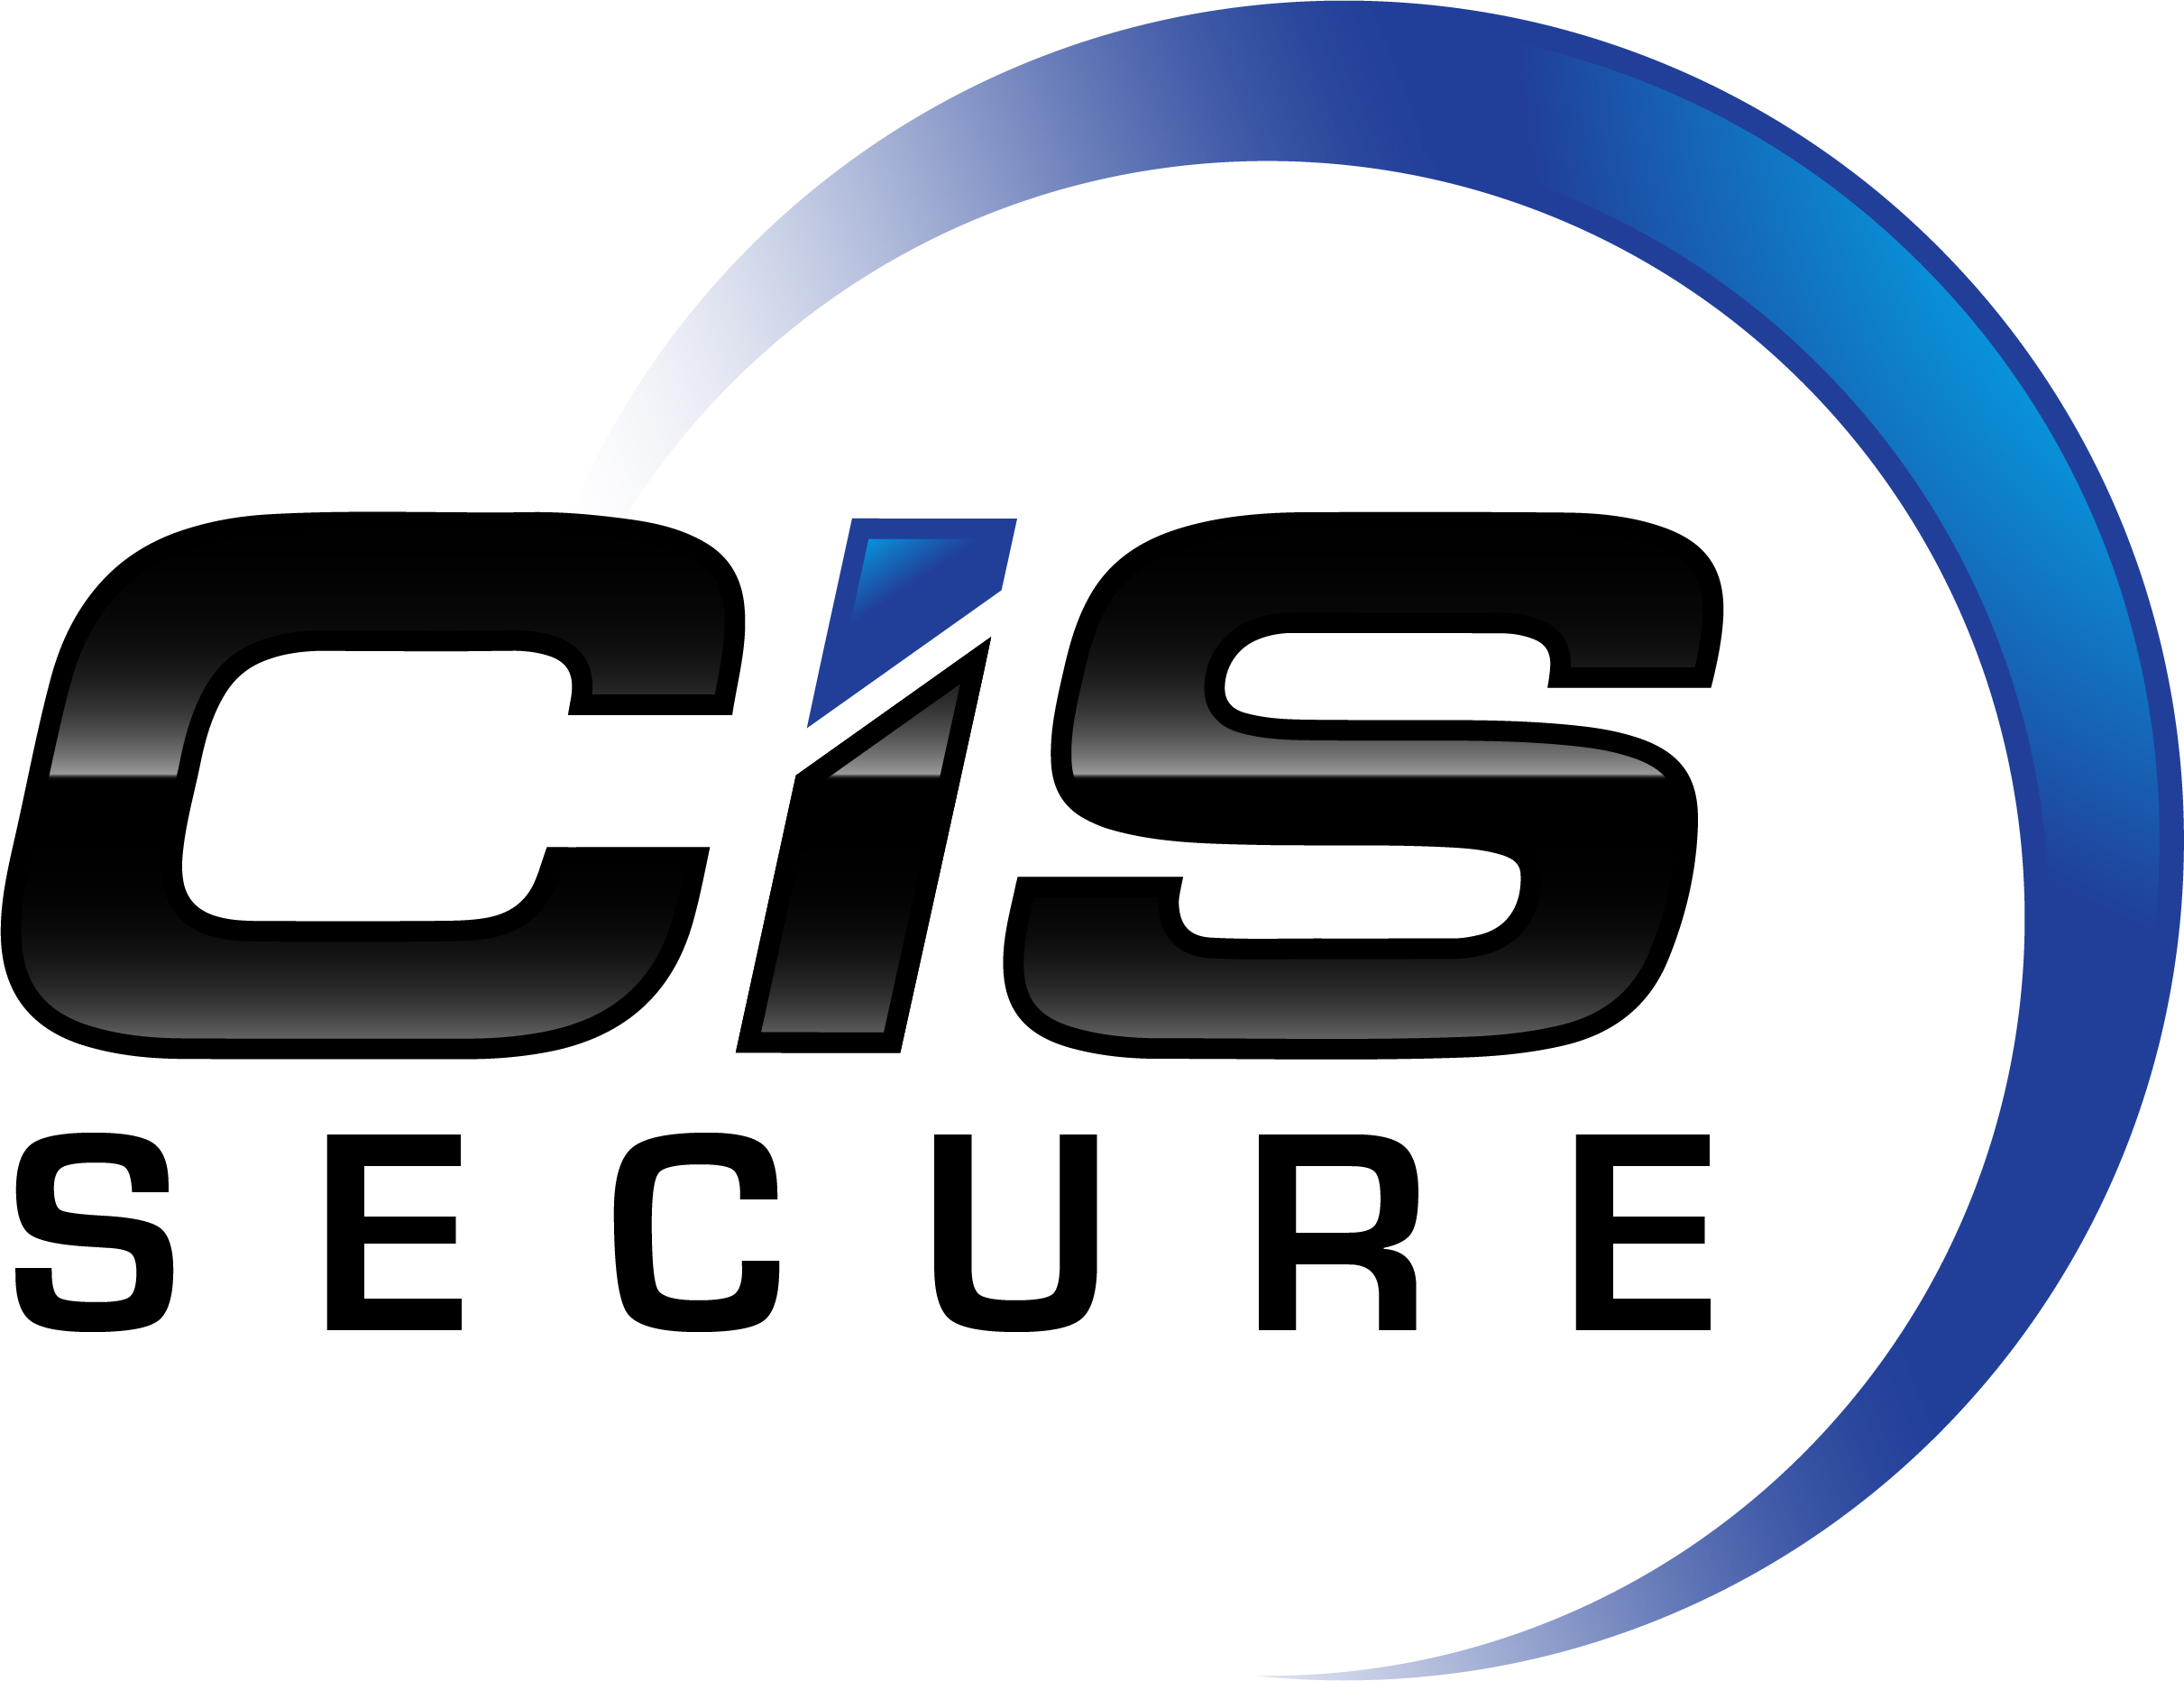 CIS Secure logo